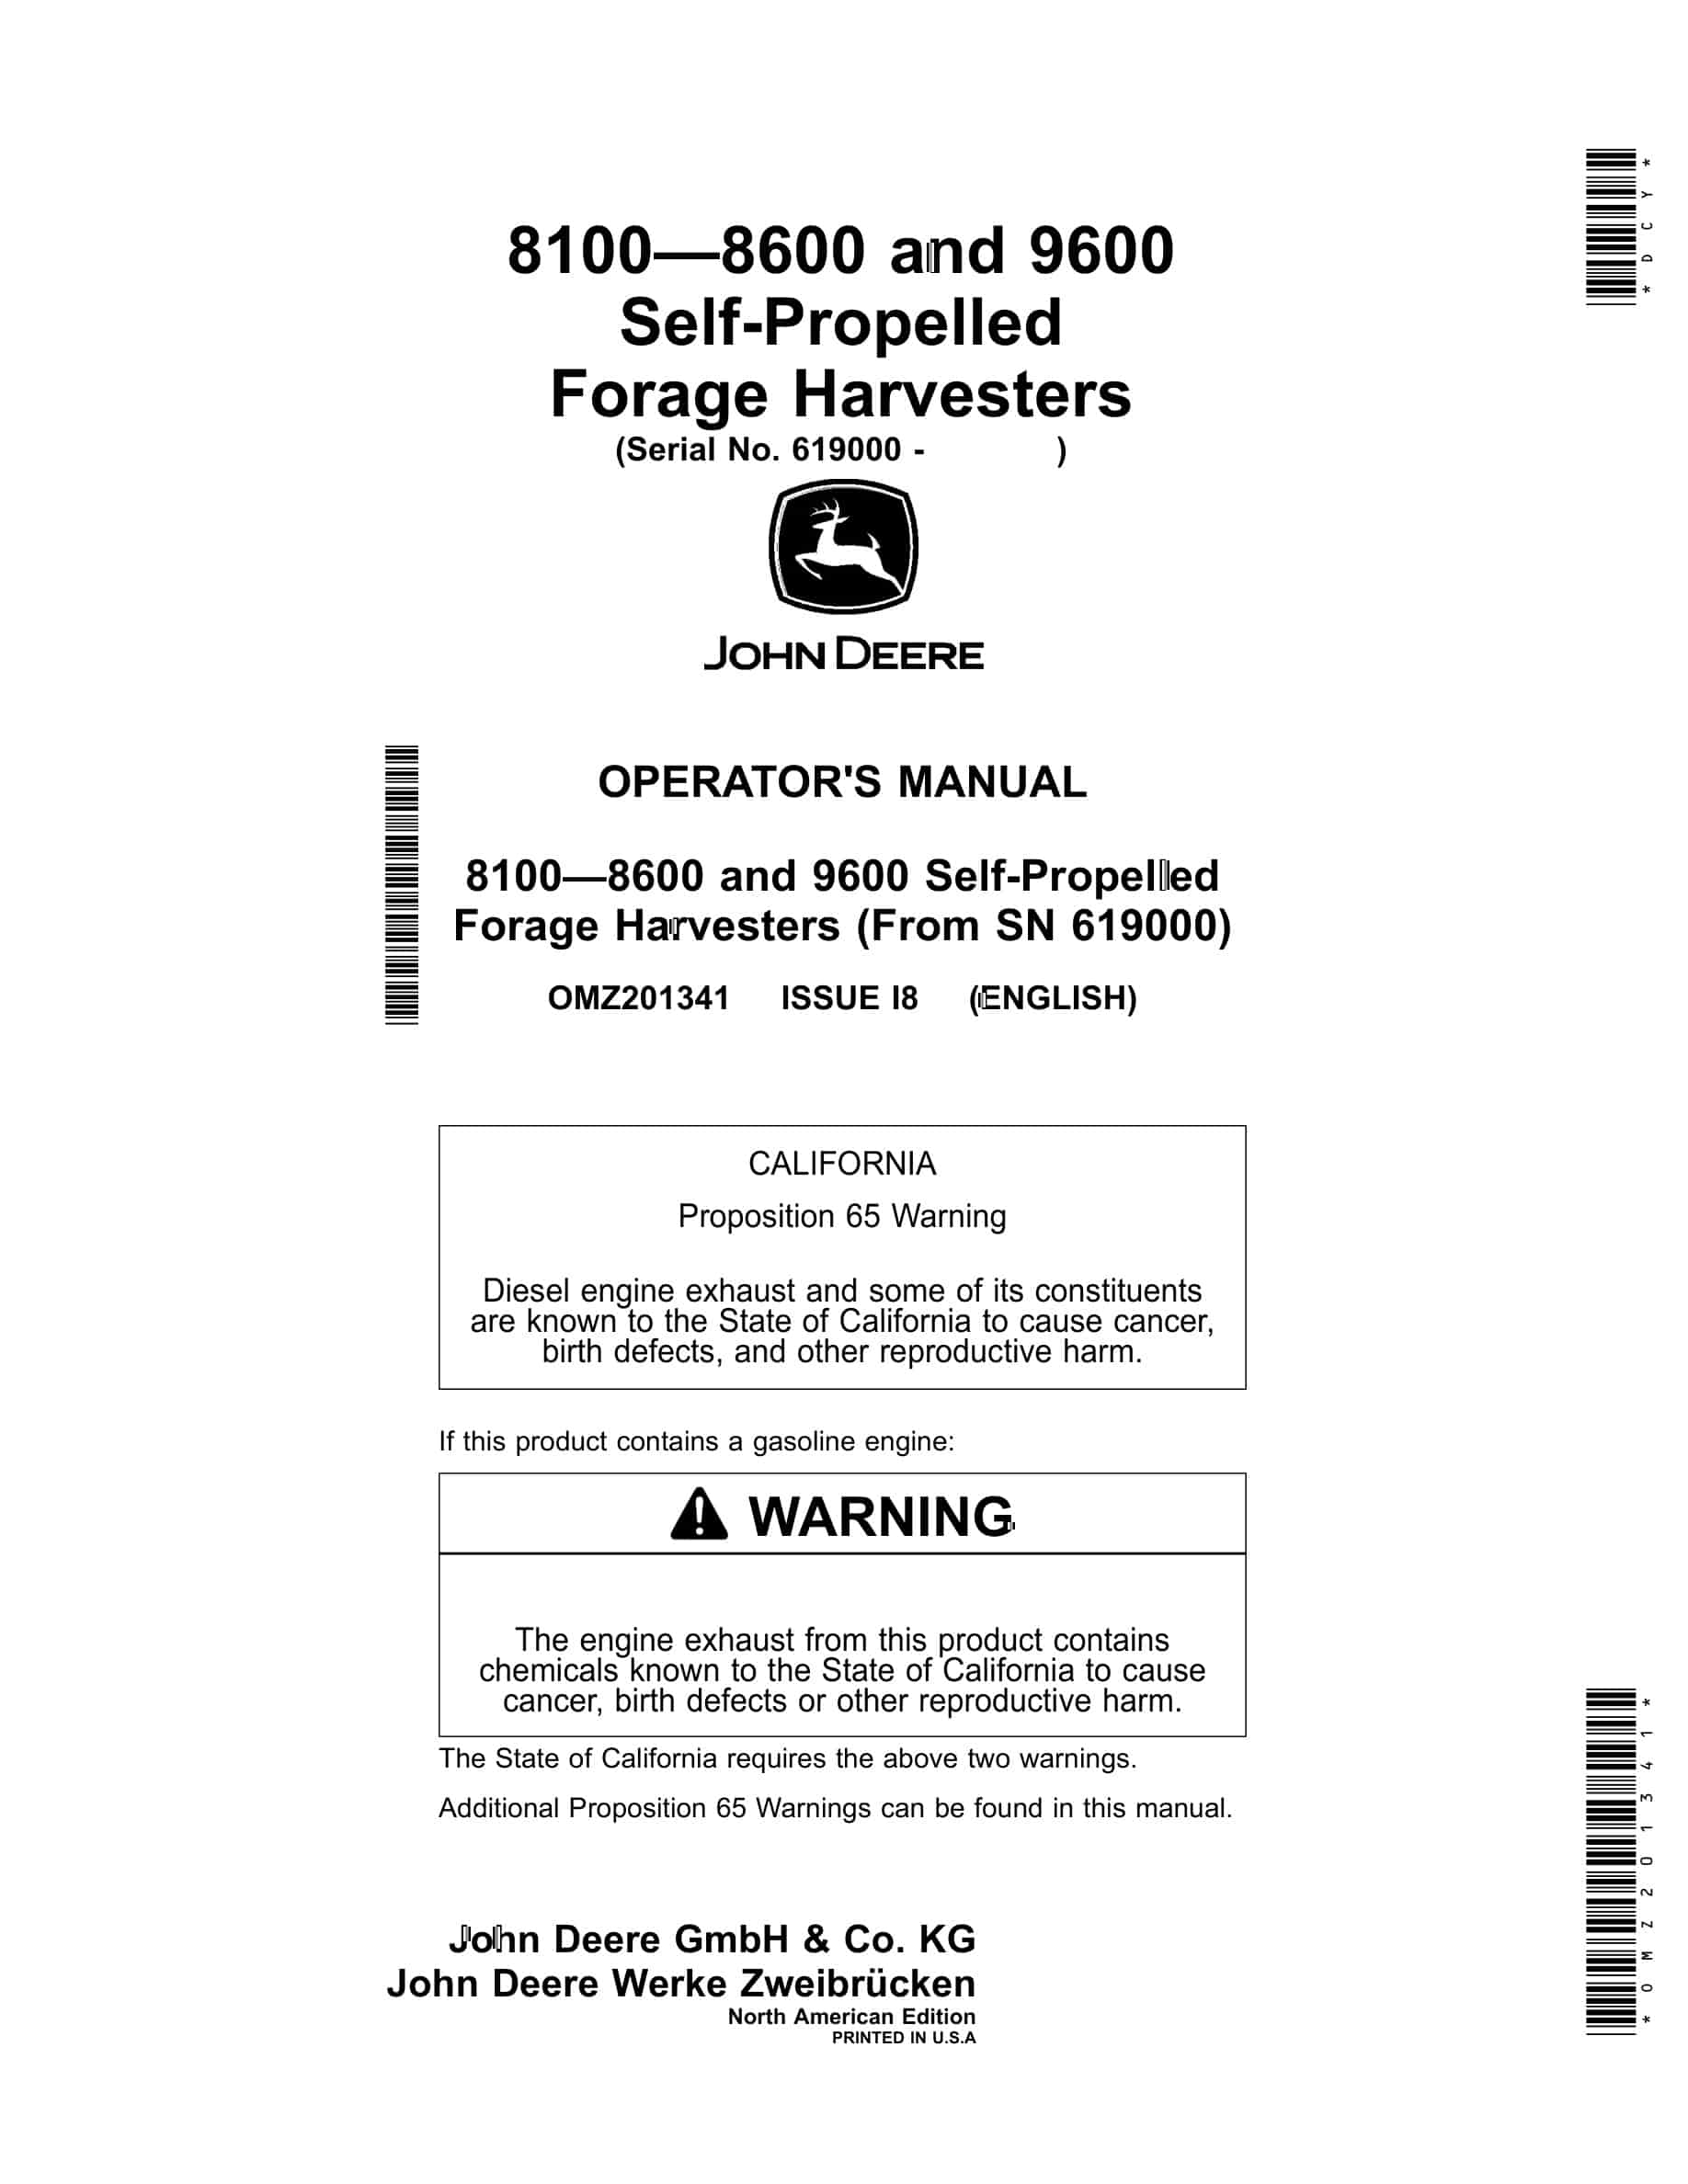 John Deere 8100 – 8800 Self-Propelled Forage Harvester Operator Manual OMZ201341-1